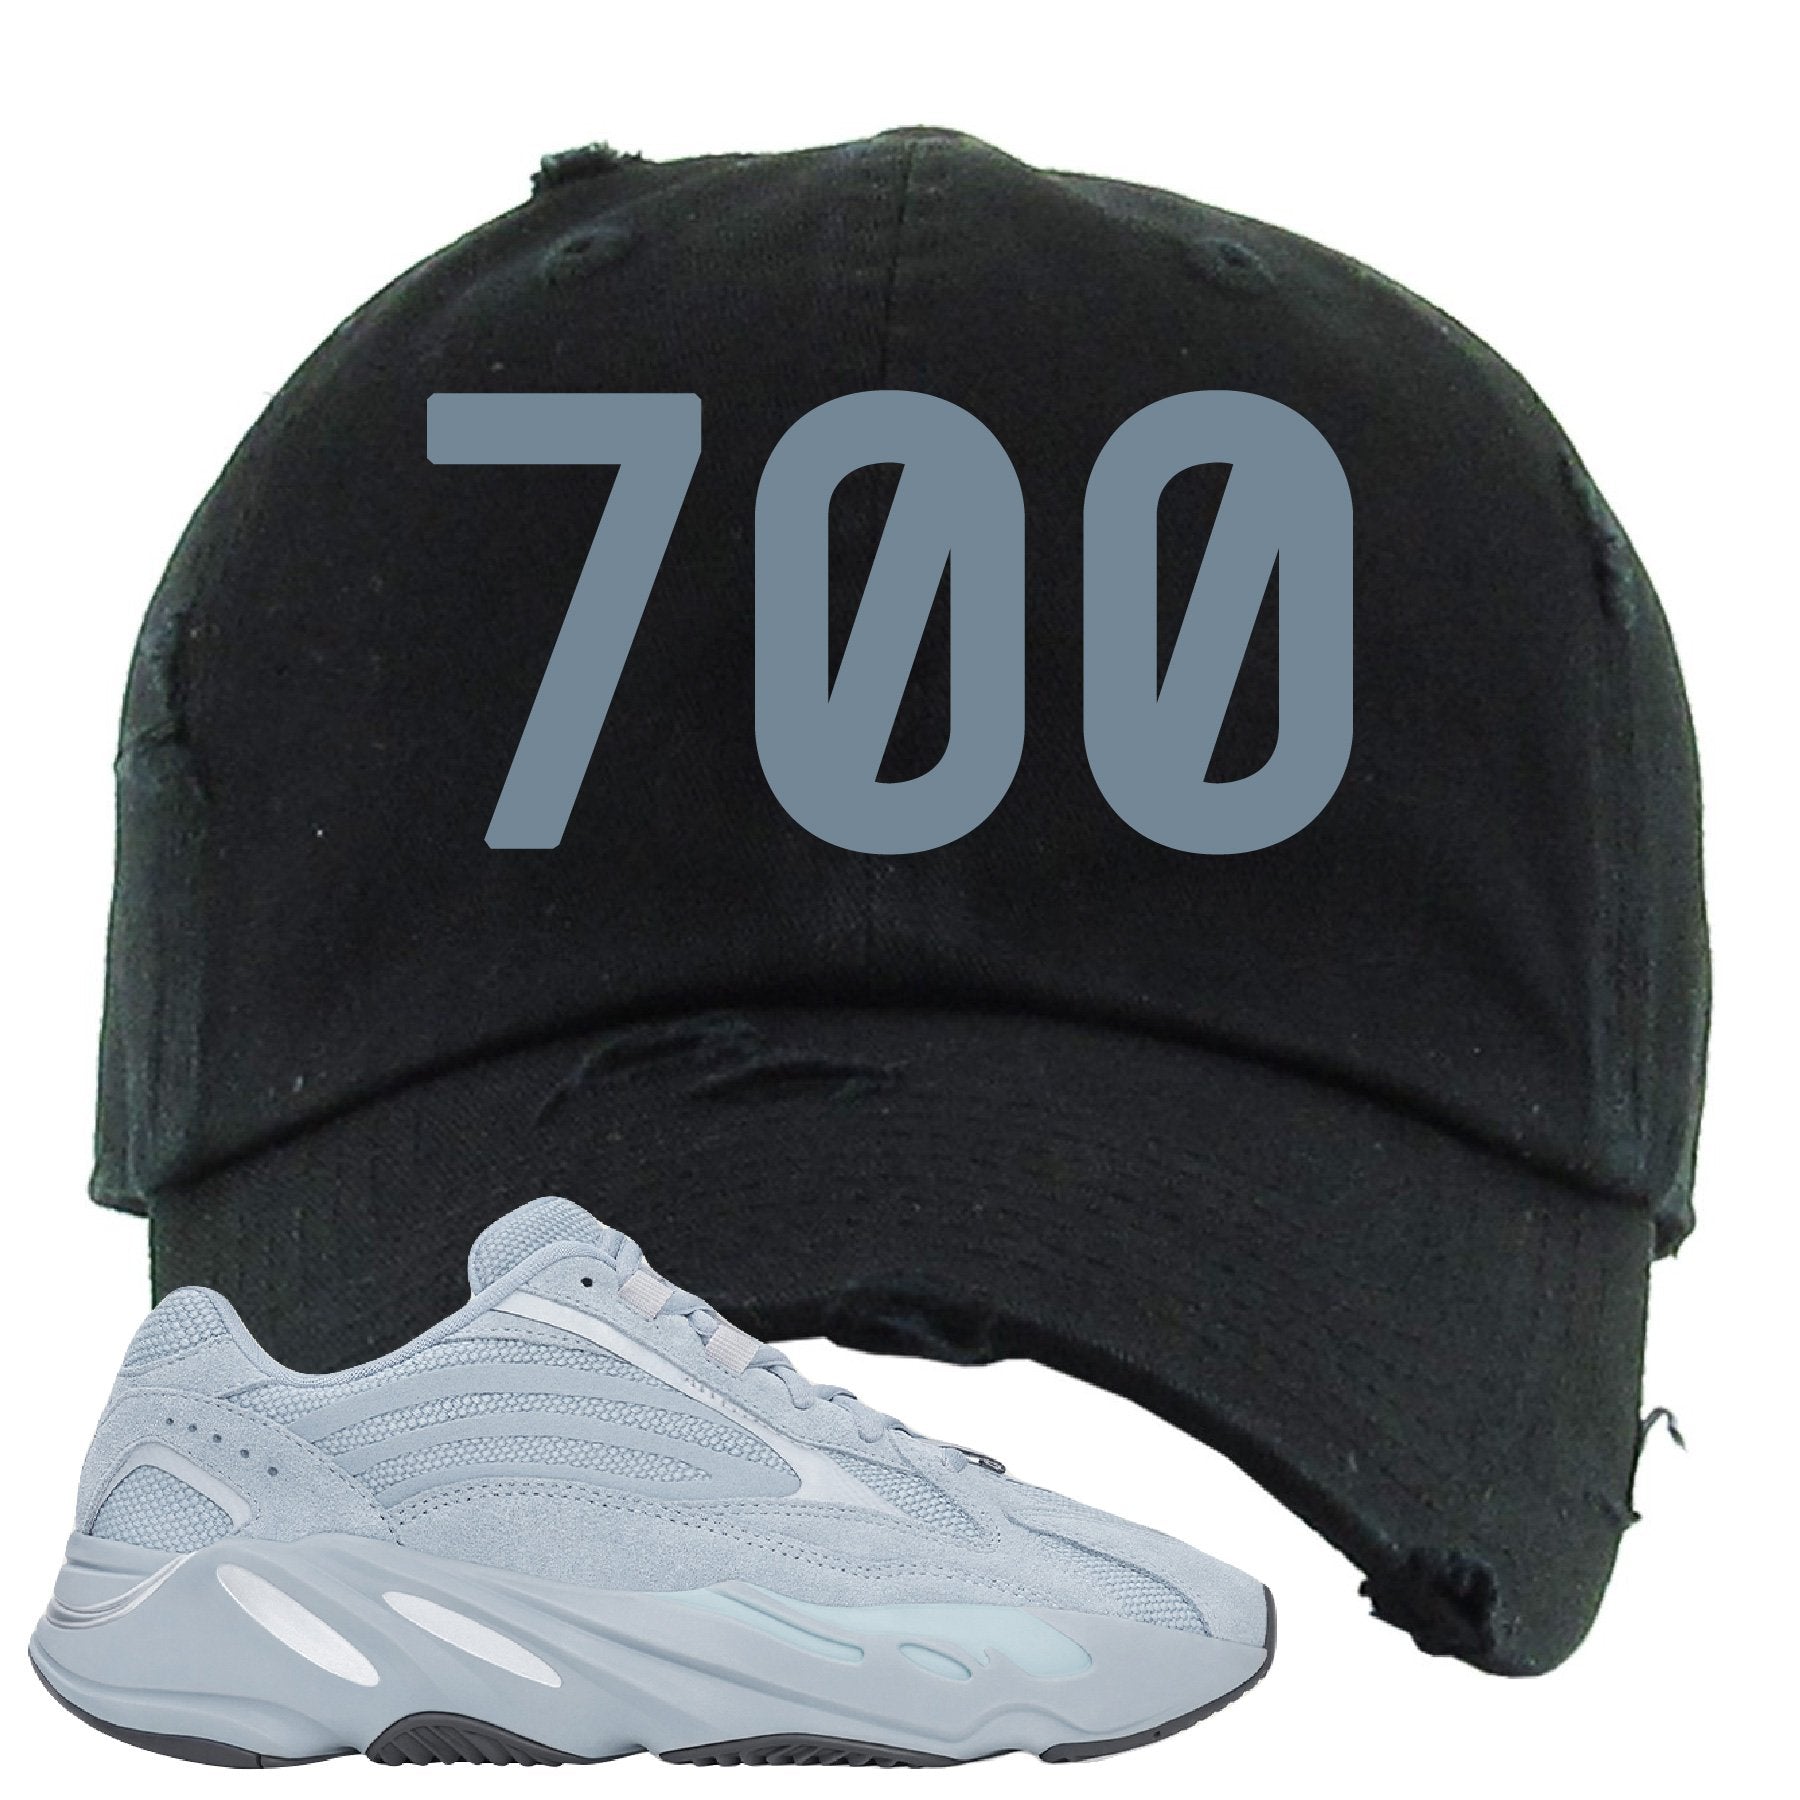 Yeezy Boost 700 V2 Hospital Blue 700 Sneaker Matching Black Distressed Dad Hat